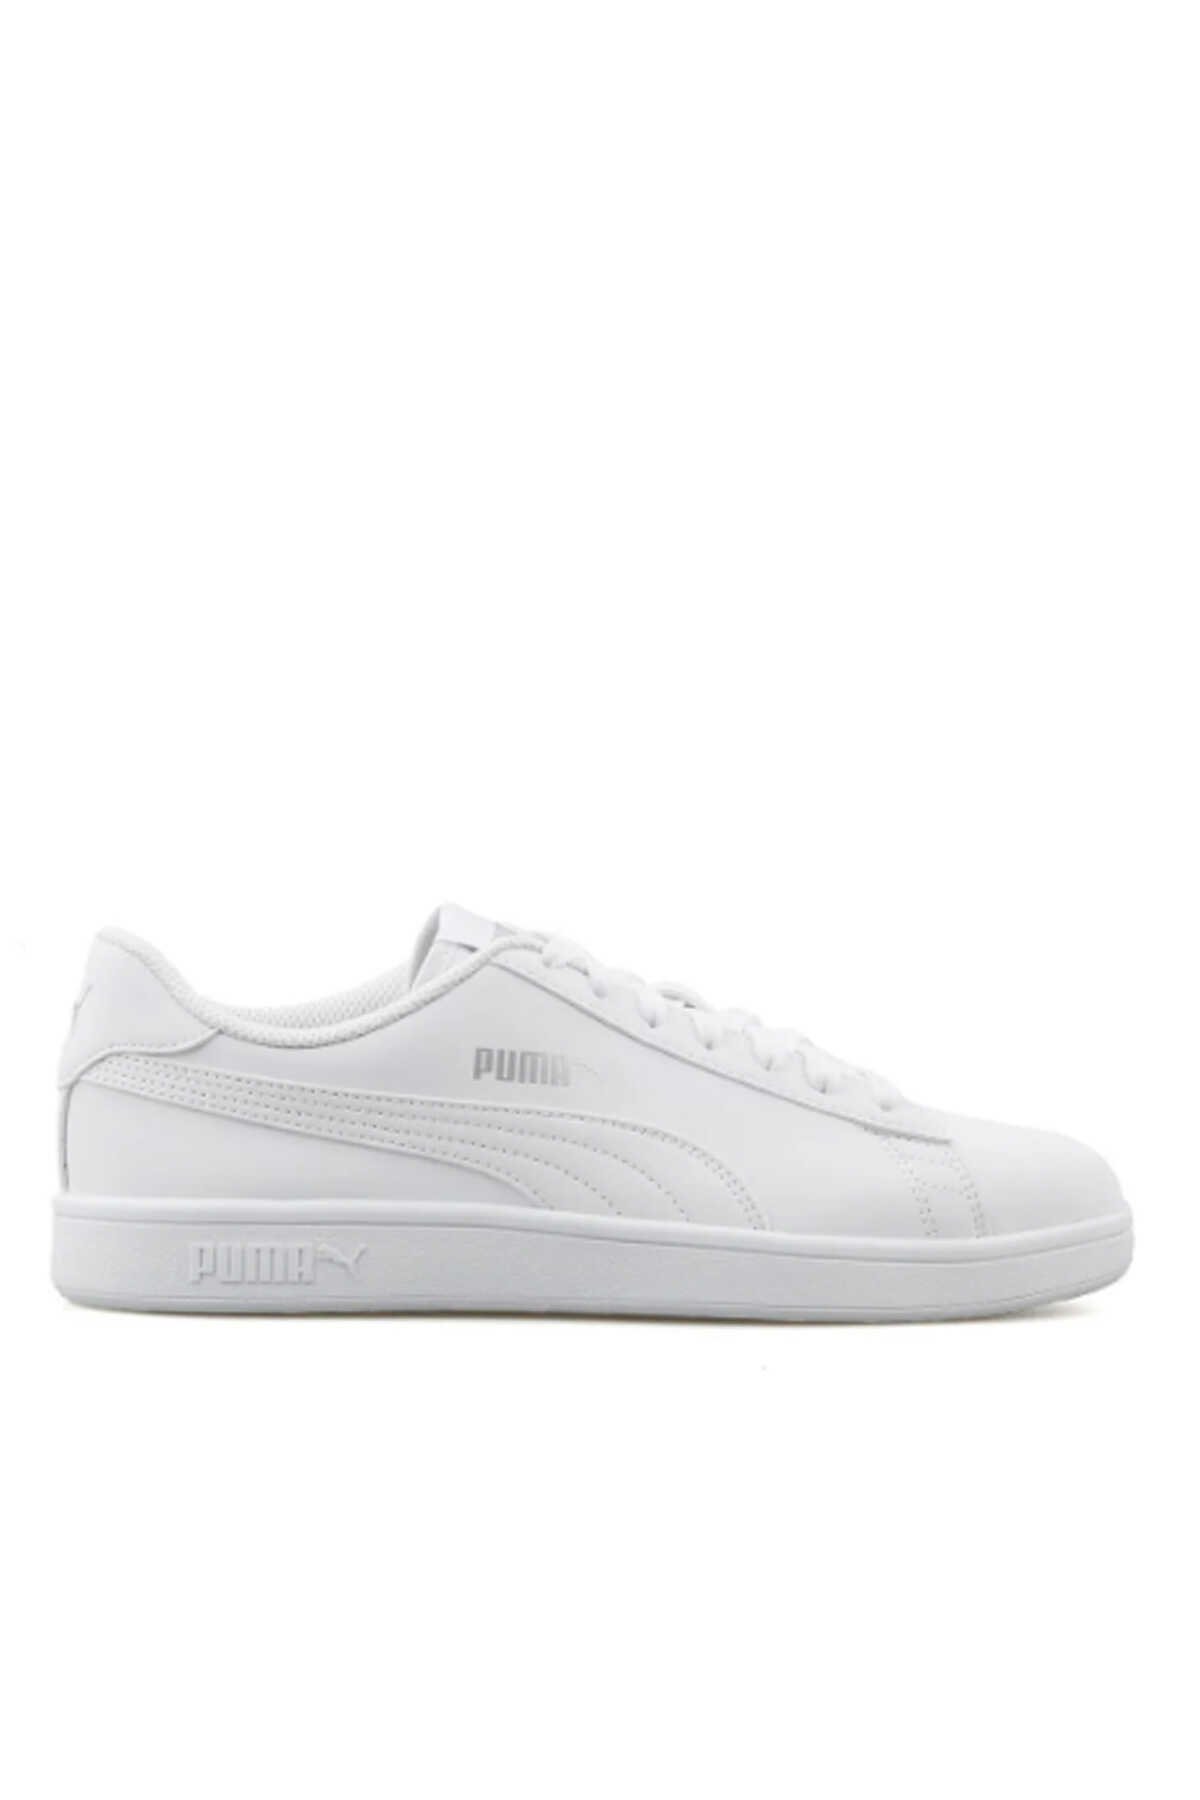 Puma - Puma Smash 3.0 L Erkek Sneaker Ayakkabı Beyaz